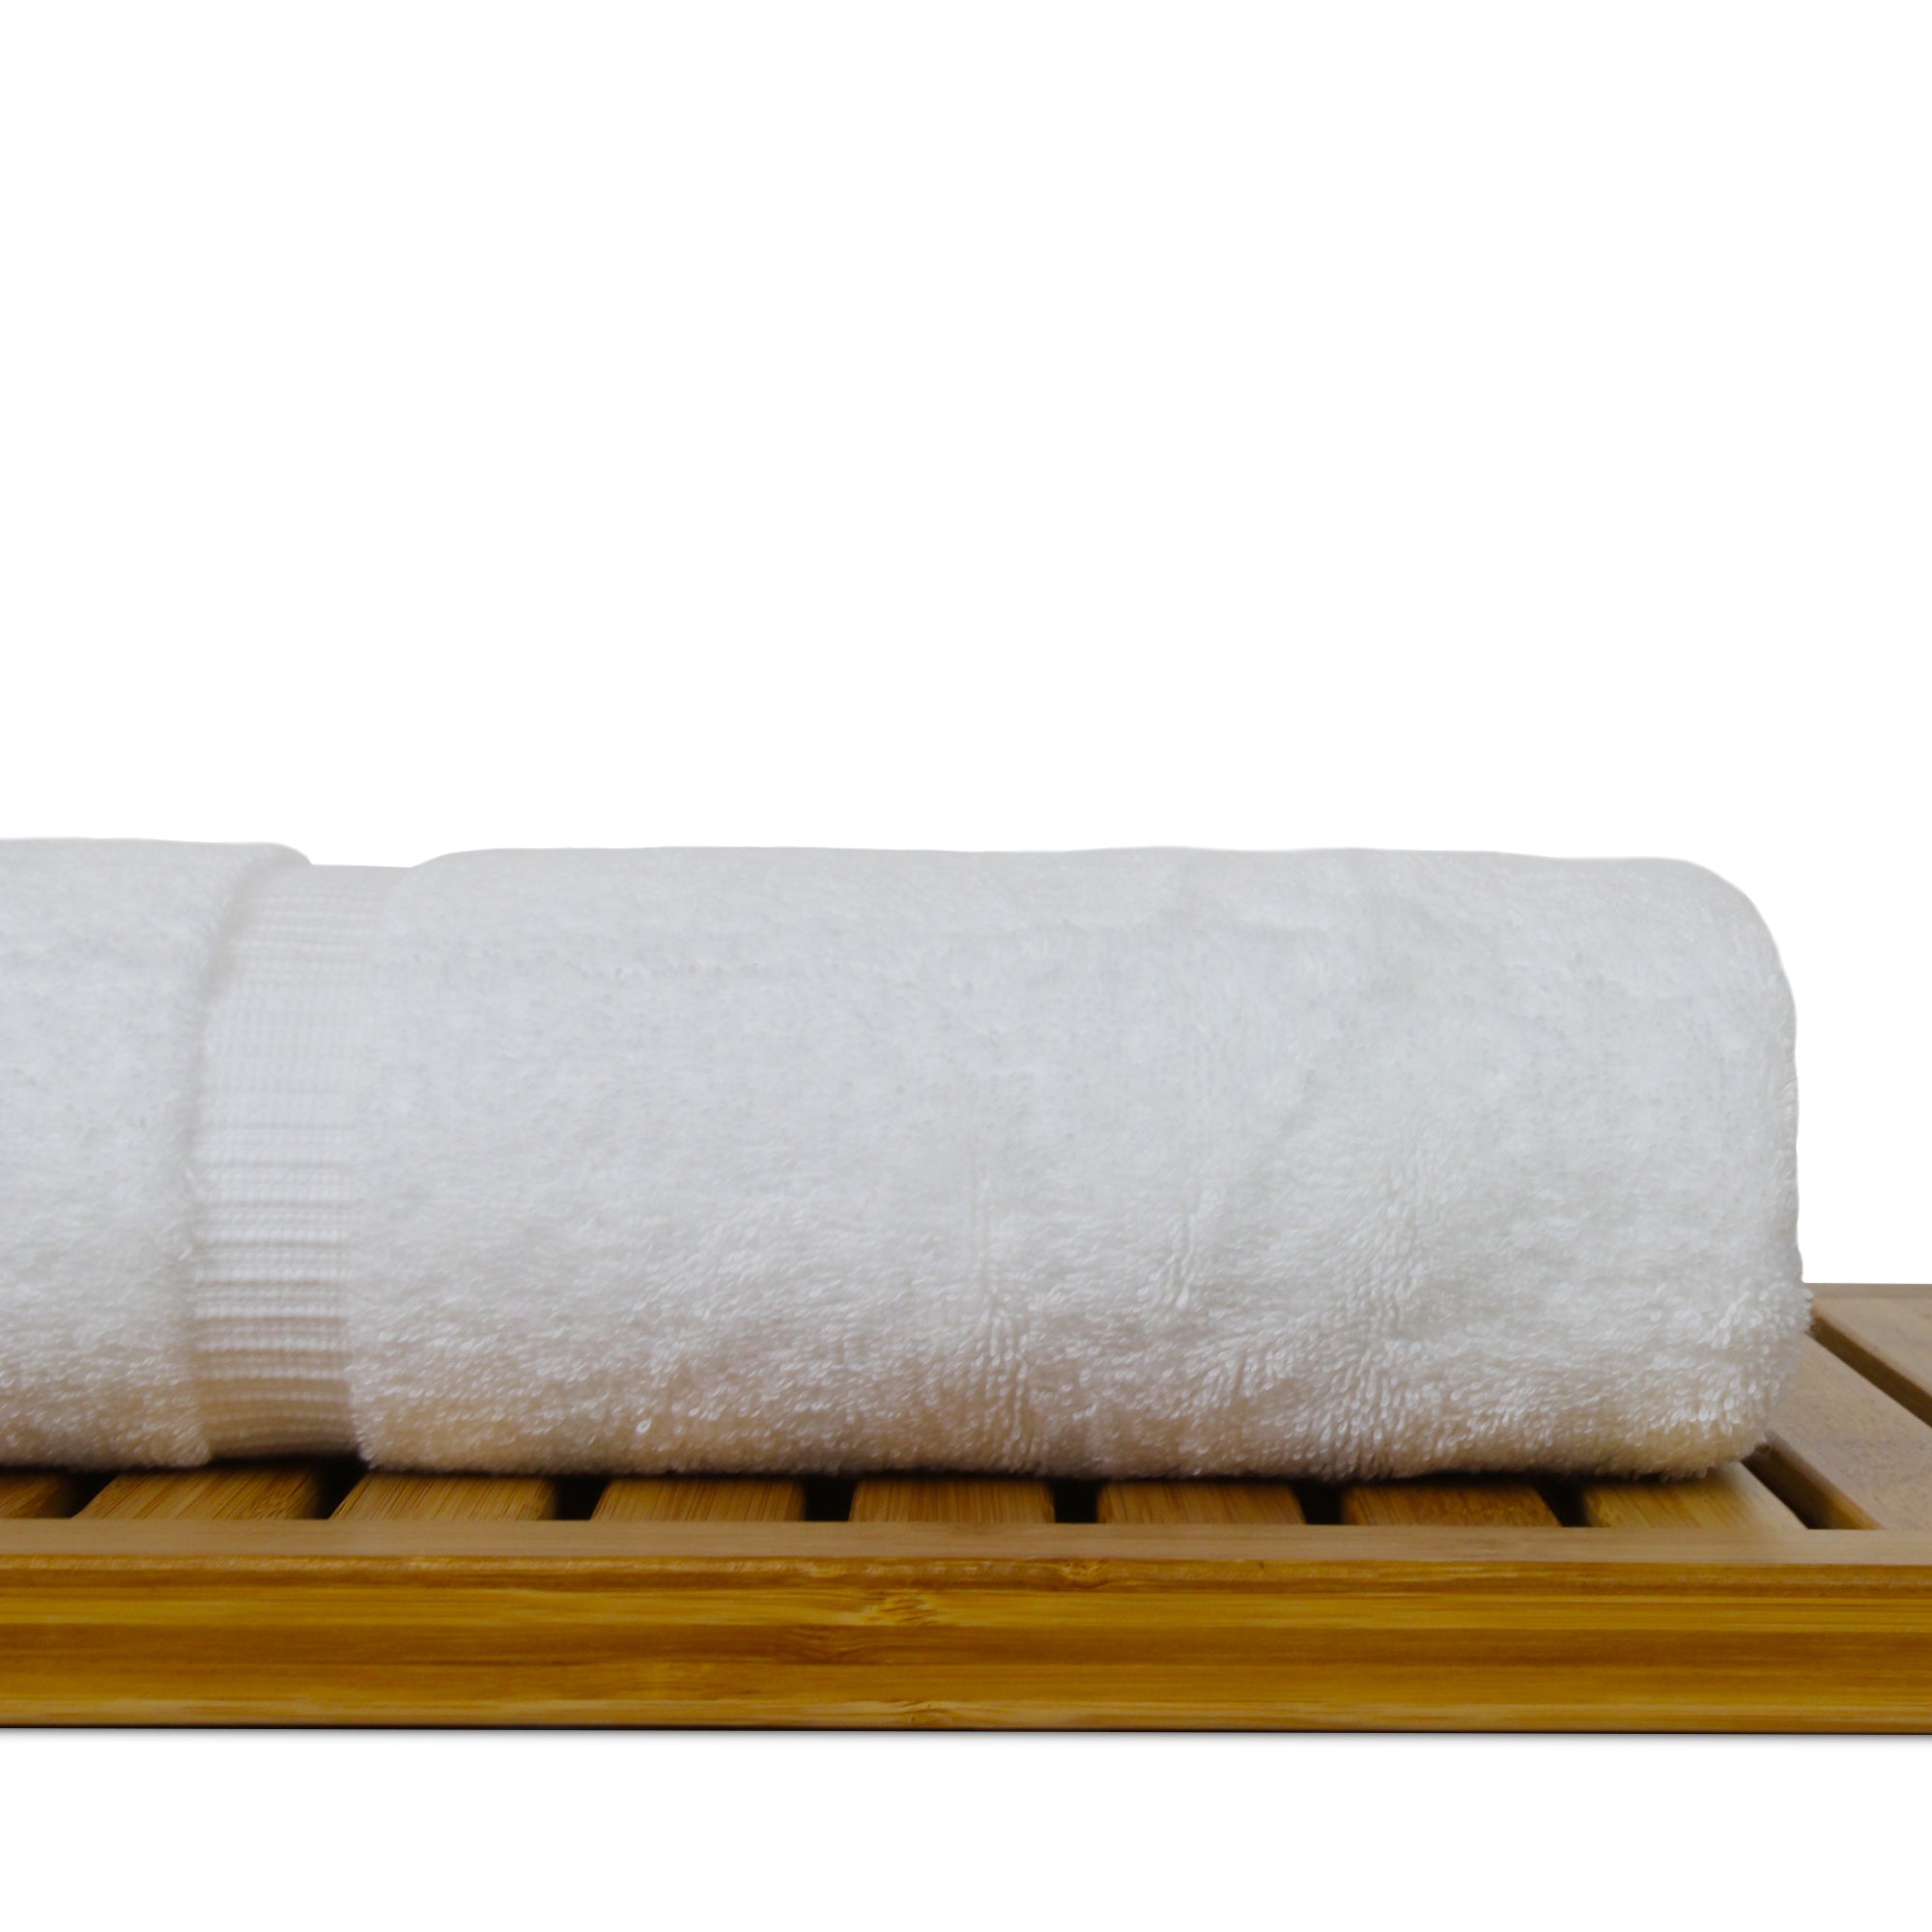 Bare Cotton Luxury Hotel & Spa Towel 100% Genuine Turkish Cotton Hand Towels, White - Set of 6